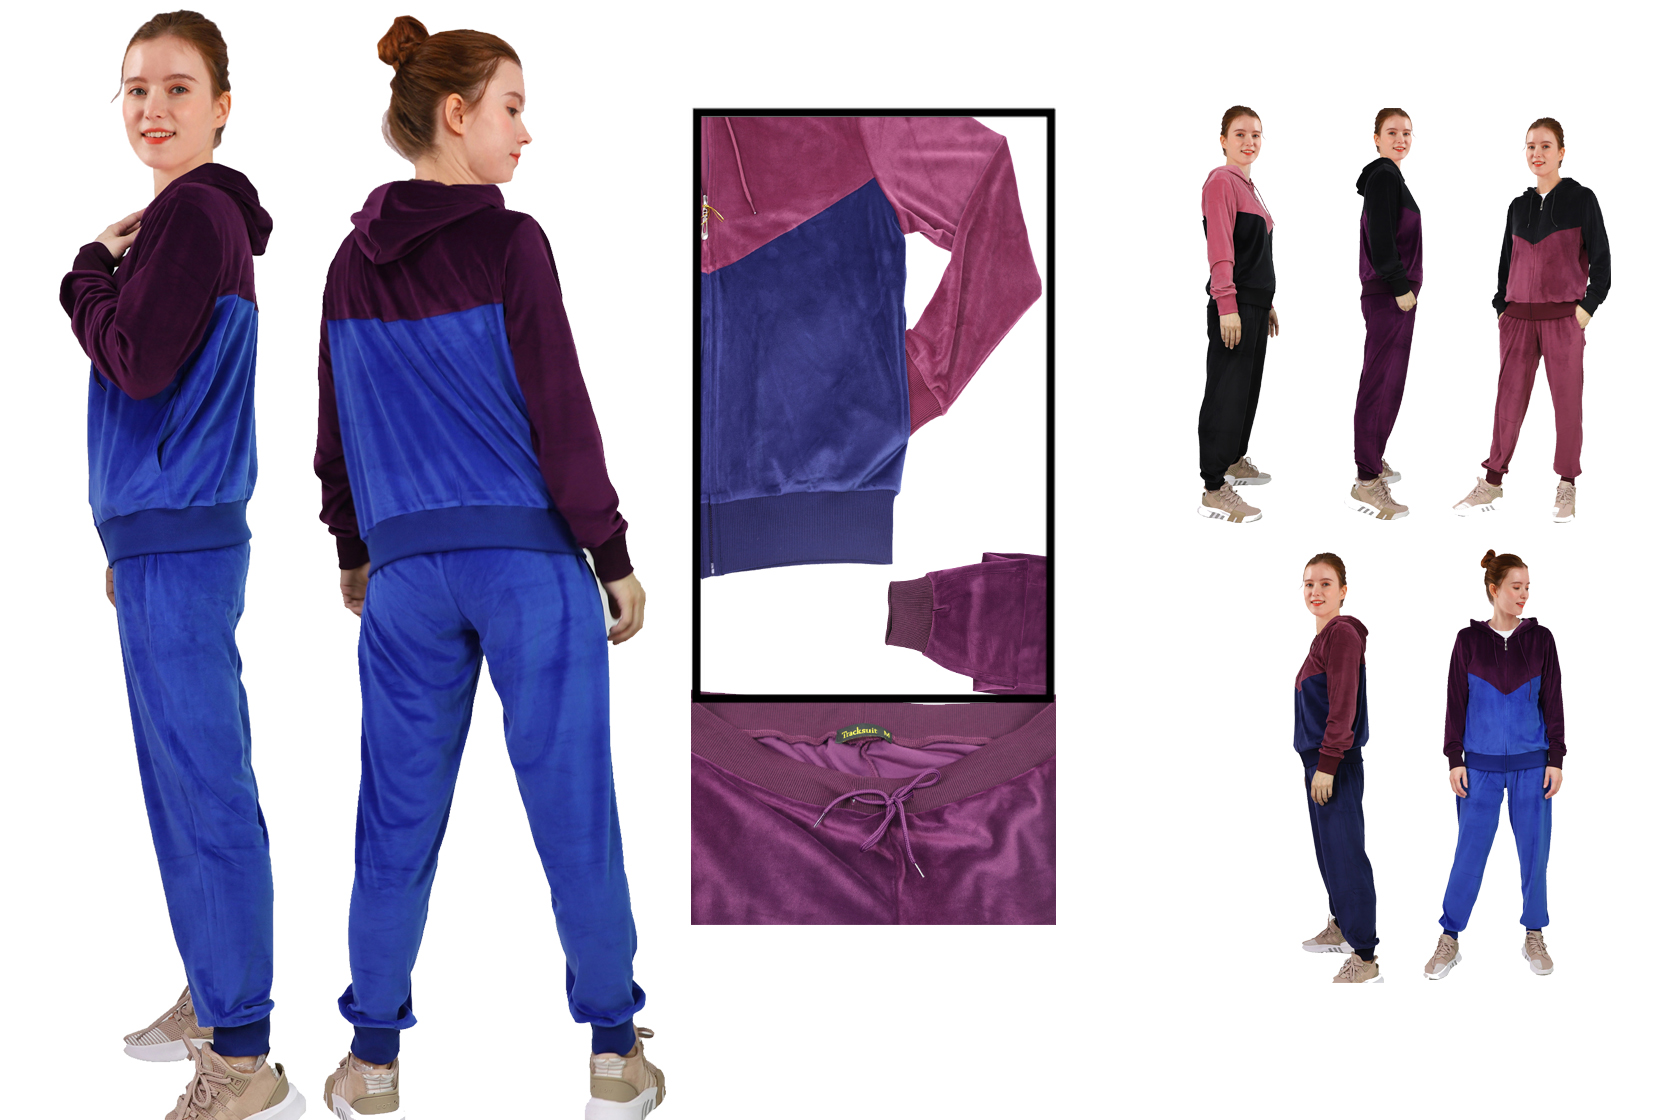 Women's 2-Piece Soft Velvet Sports Zip-Up Hoodie & Sweatpants Sets w/ Two Tone Colors - Choose Your 